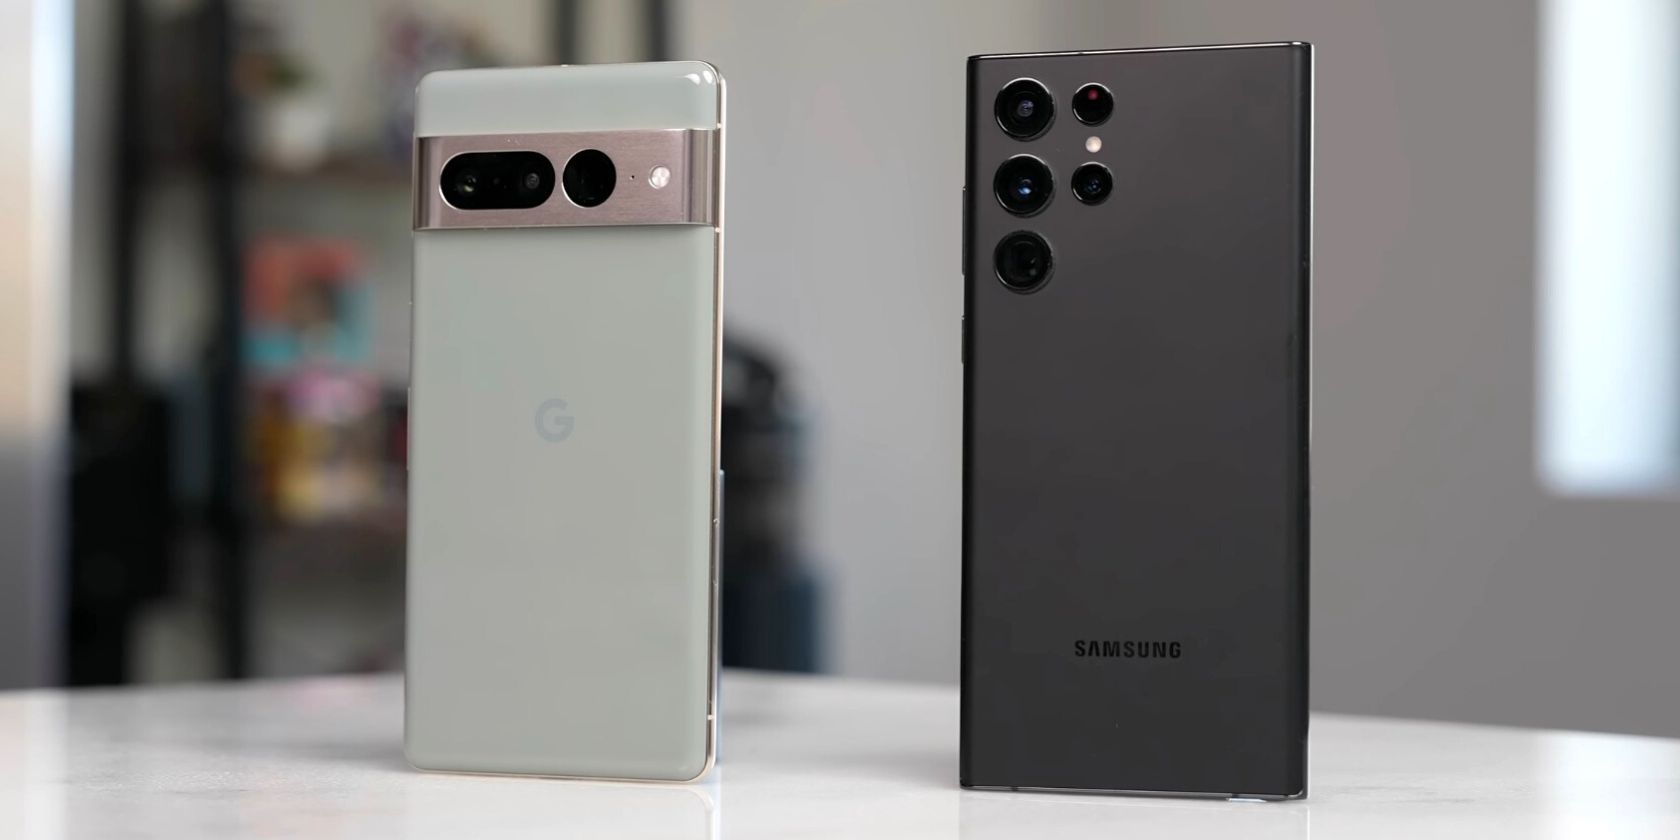 Google Pixel vs. Samsung Galaxy featured image